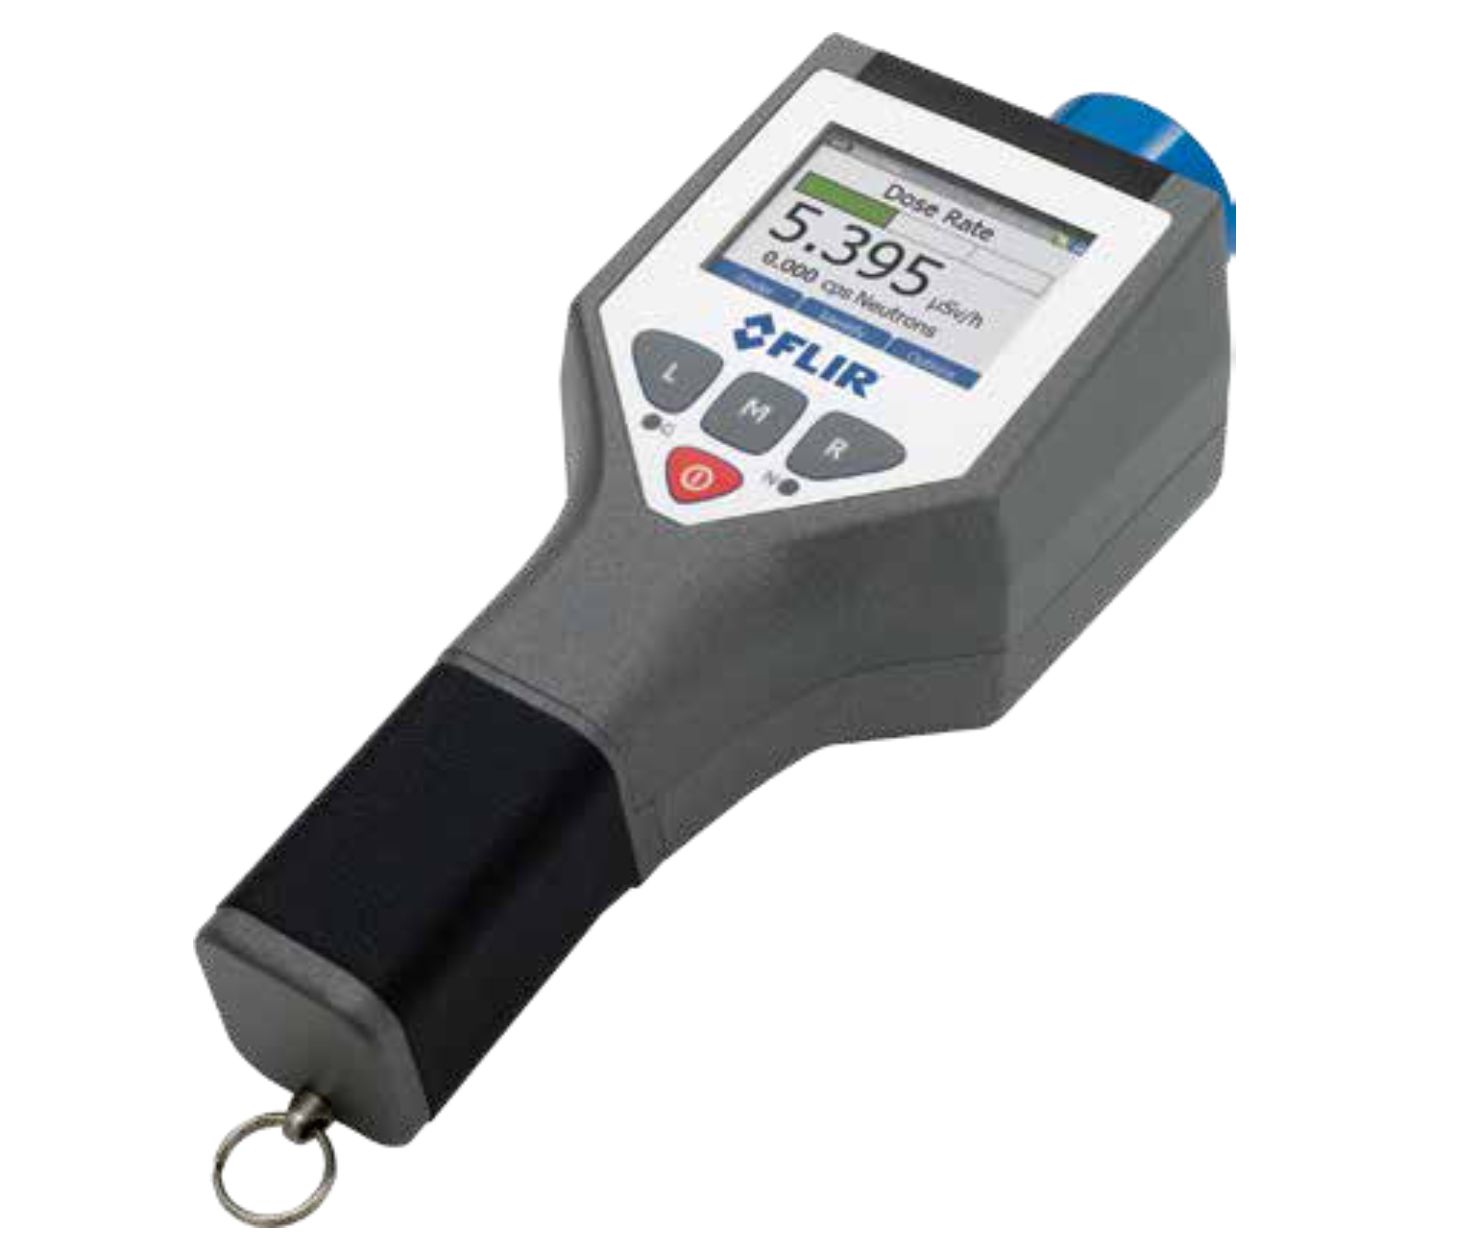 IDENTIFINDER R400 - Handheld Spectroscopic Radiation Detection and Identification